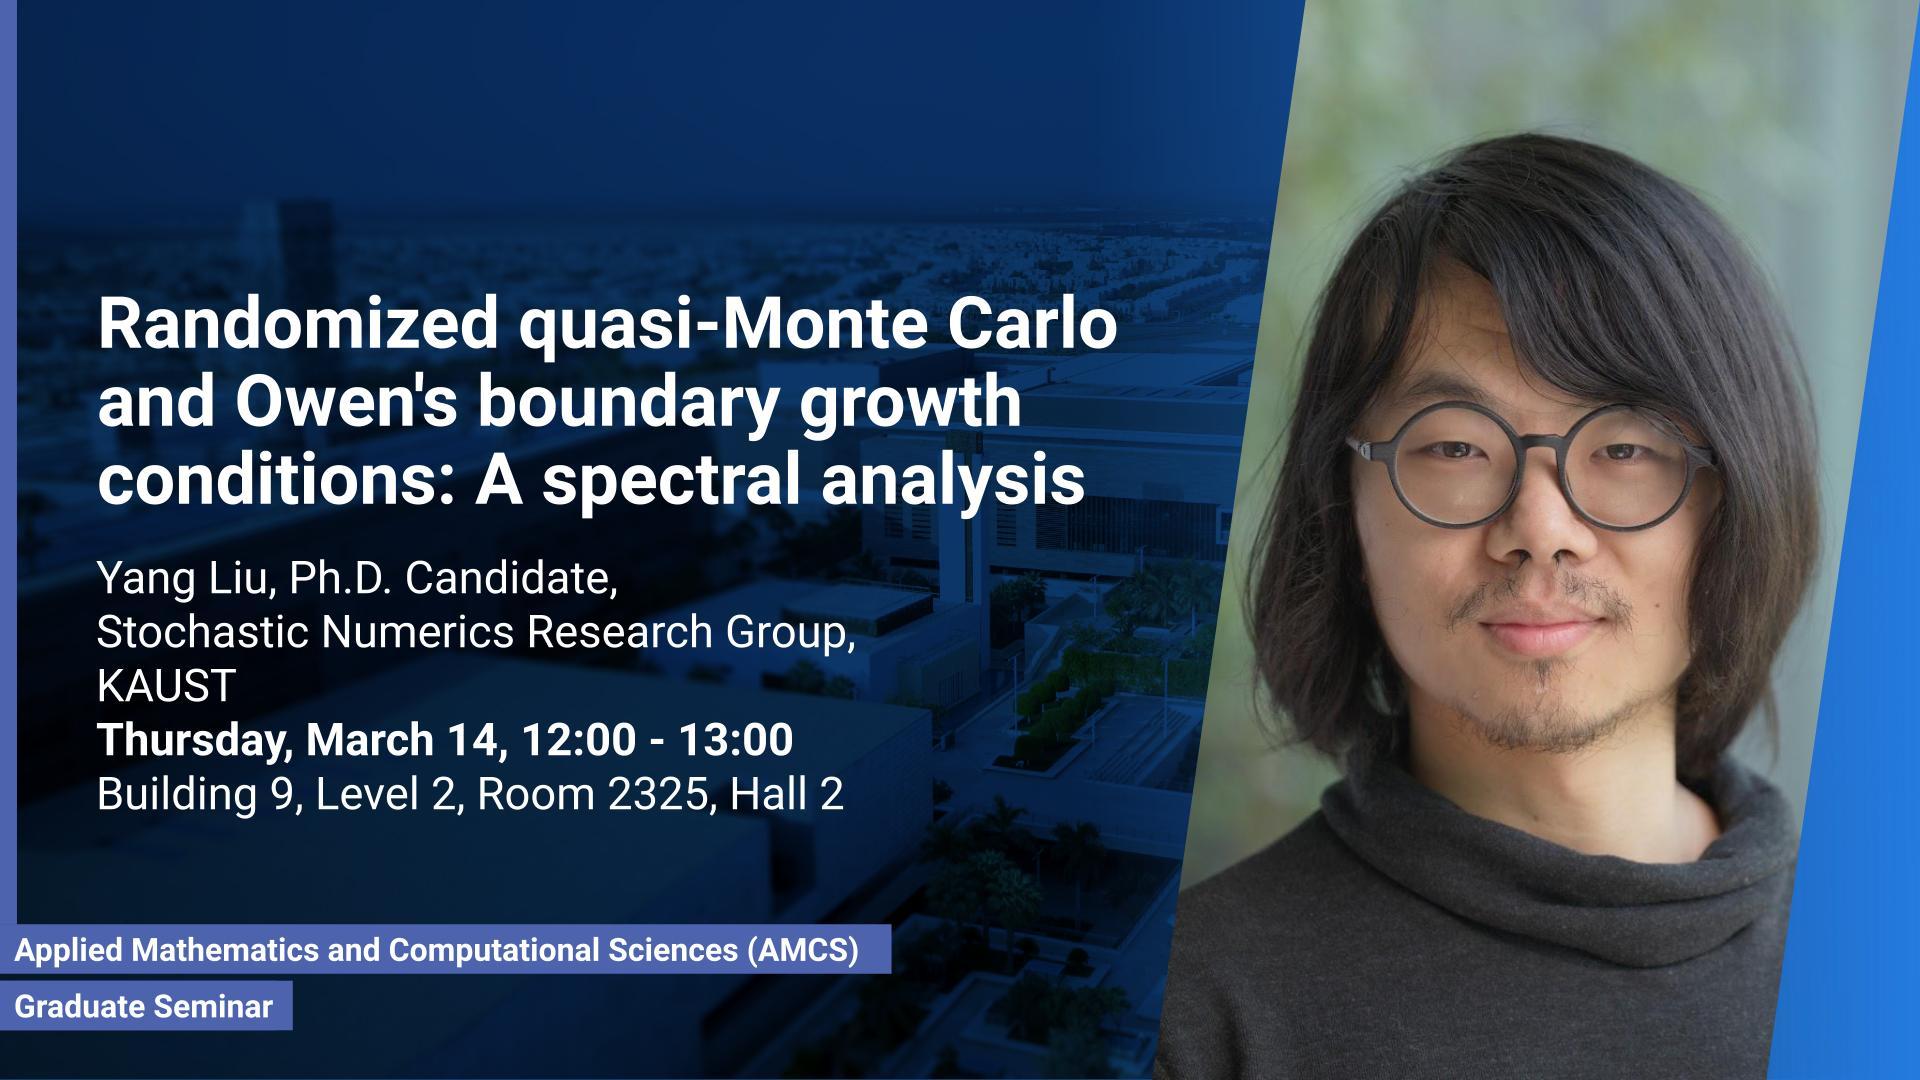 KAUST-CEMSE-AMCS-STAT-Graduate-Seminar-Yang-Liu-Randomized quasi-Monte Carlo and Owen's boundary growth conditions-A spectral analysis (1).jpg